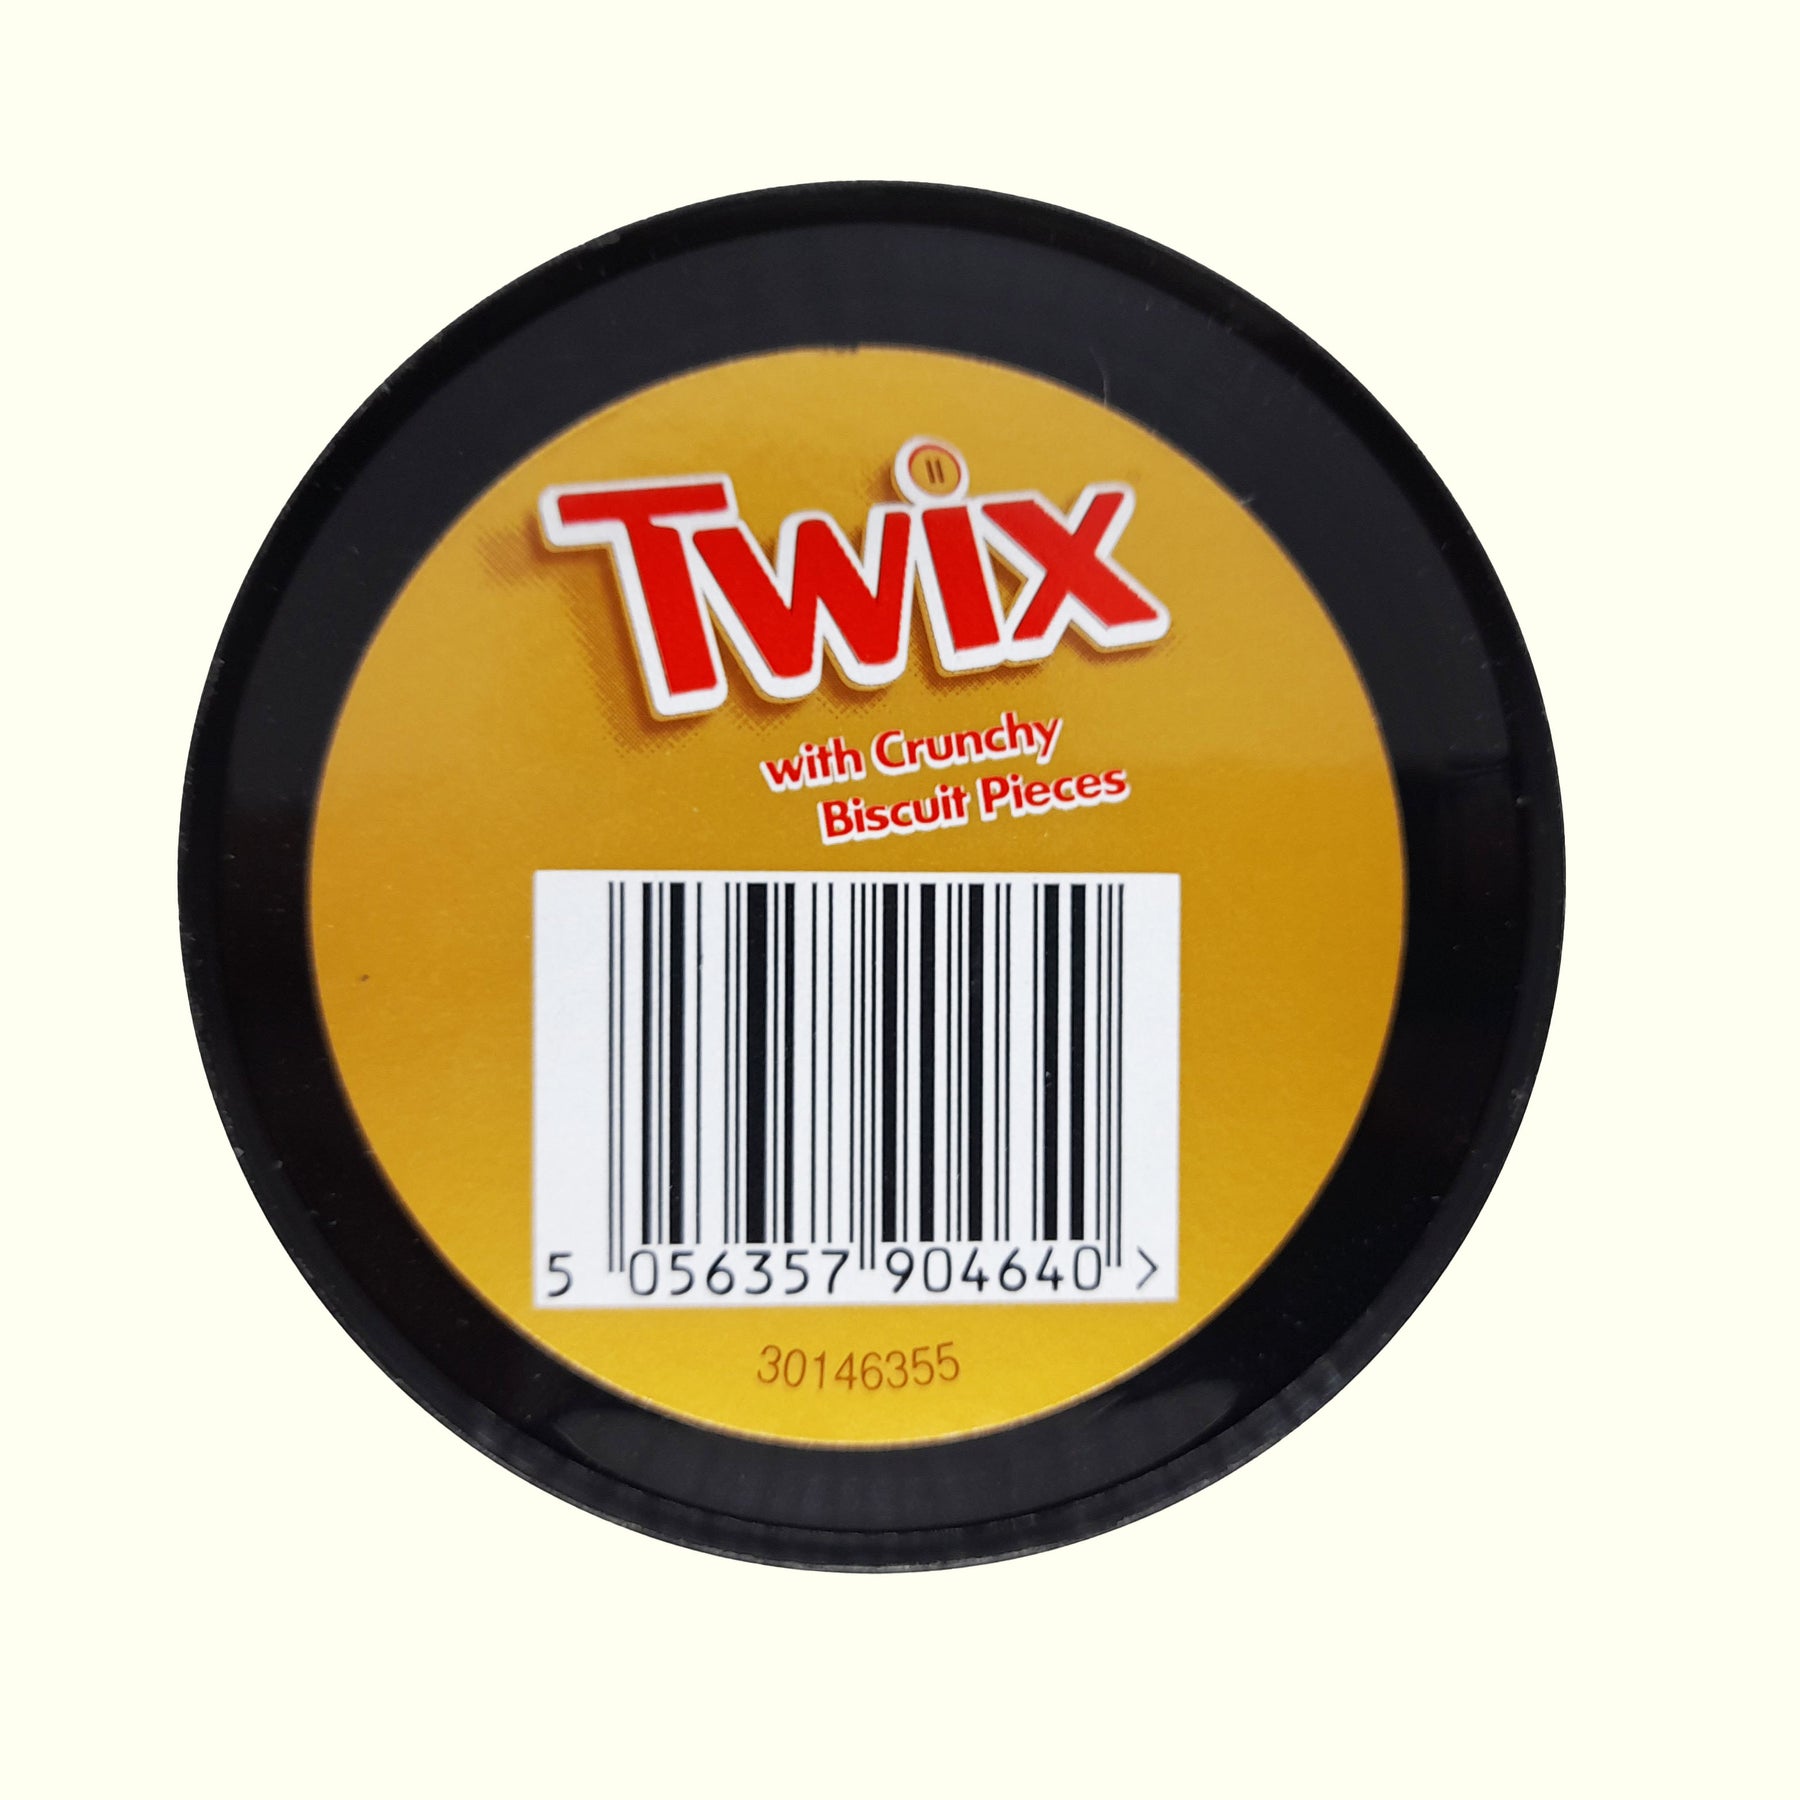 Twix Schoko-Karamell-Geschmack Brotaufstrich 350g